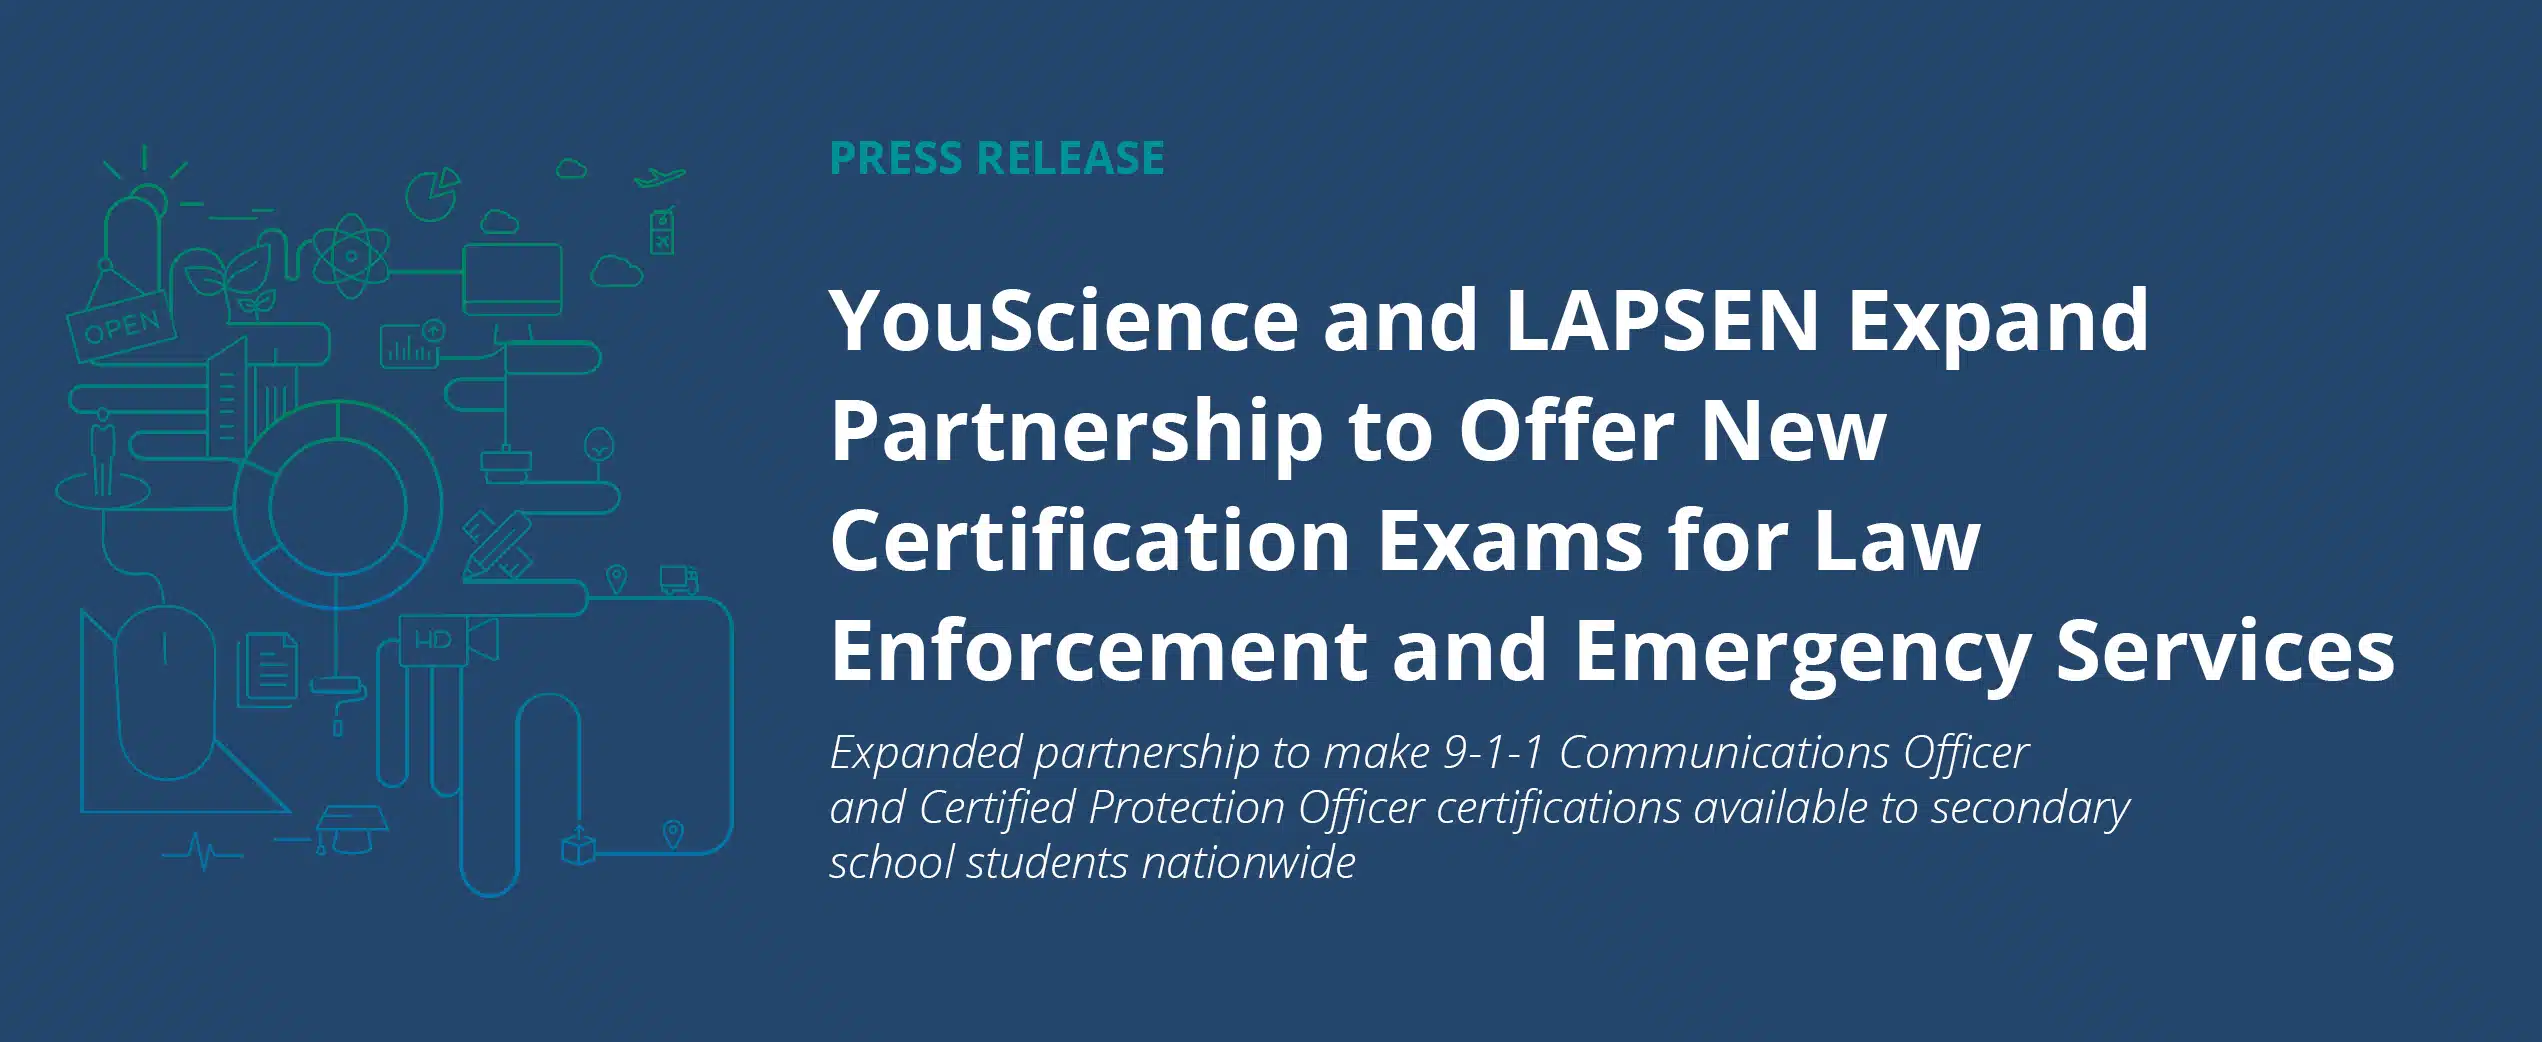 YouScience and LAPSEN Expand Partnership